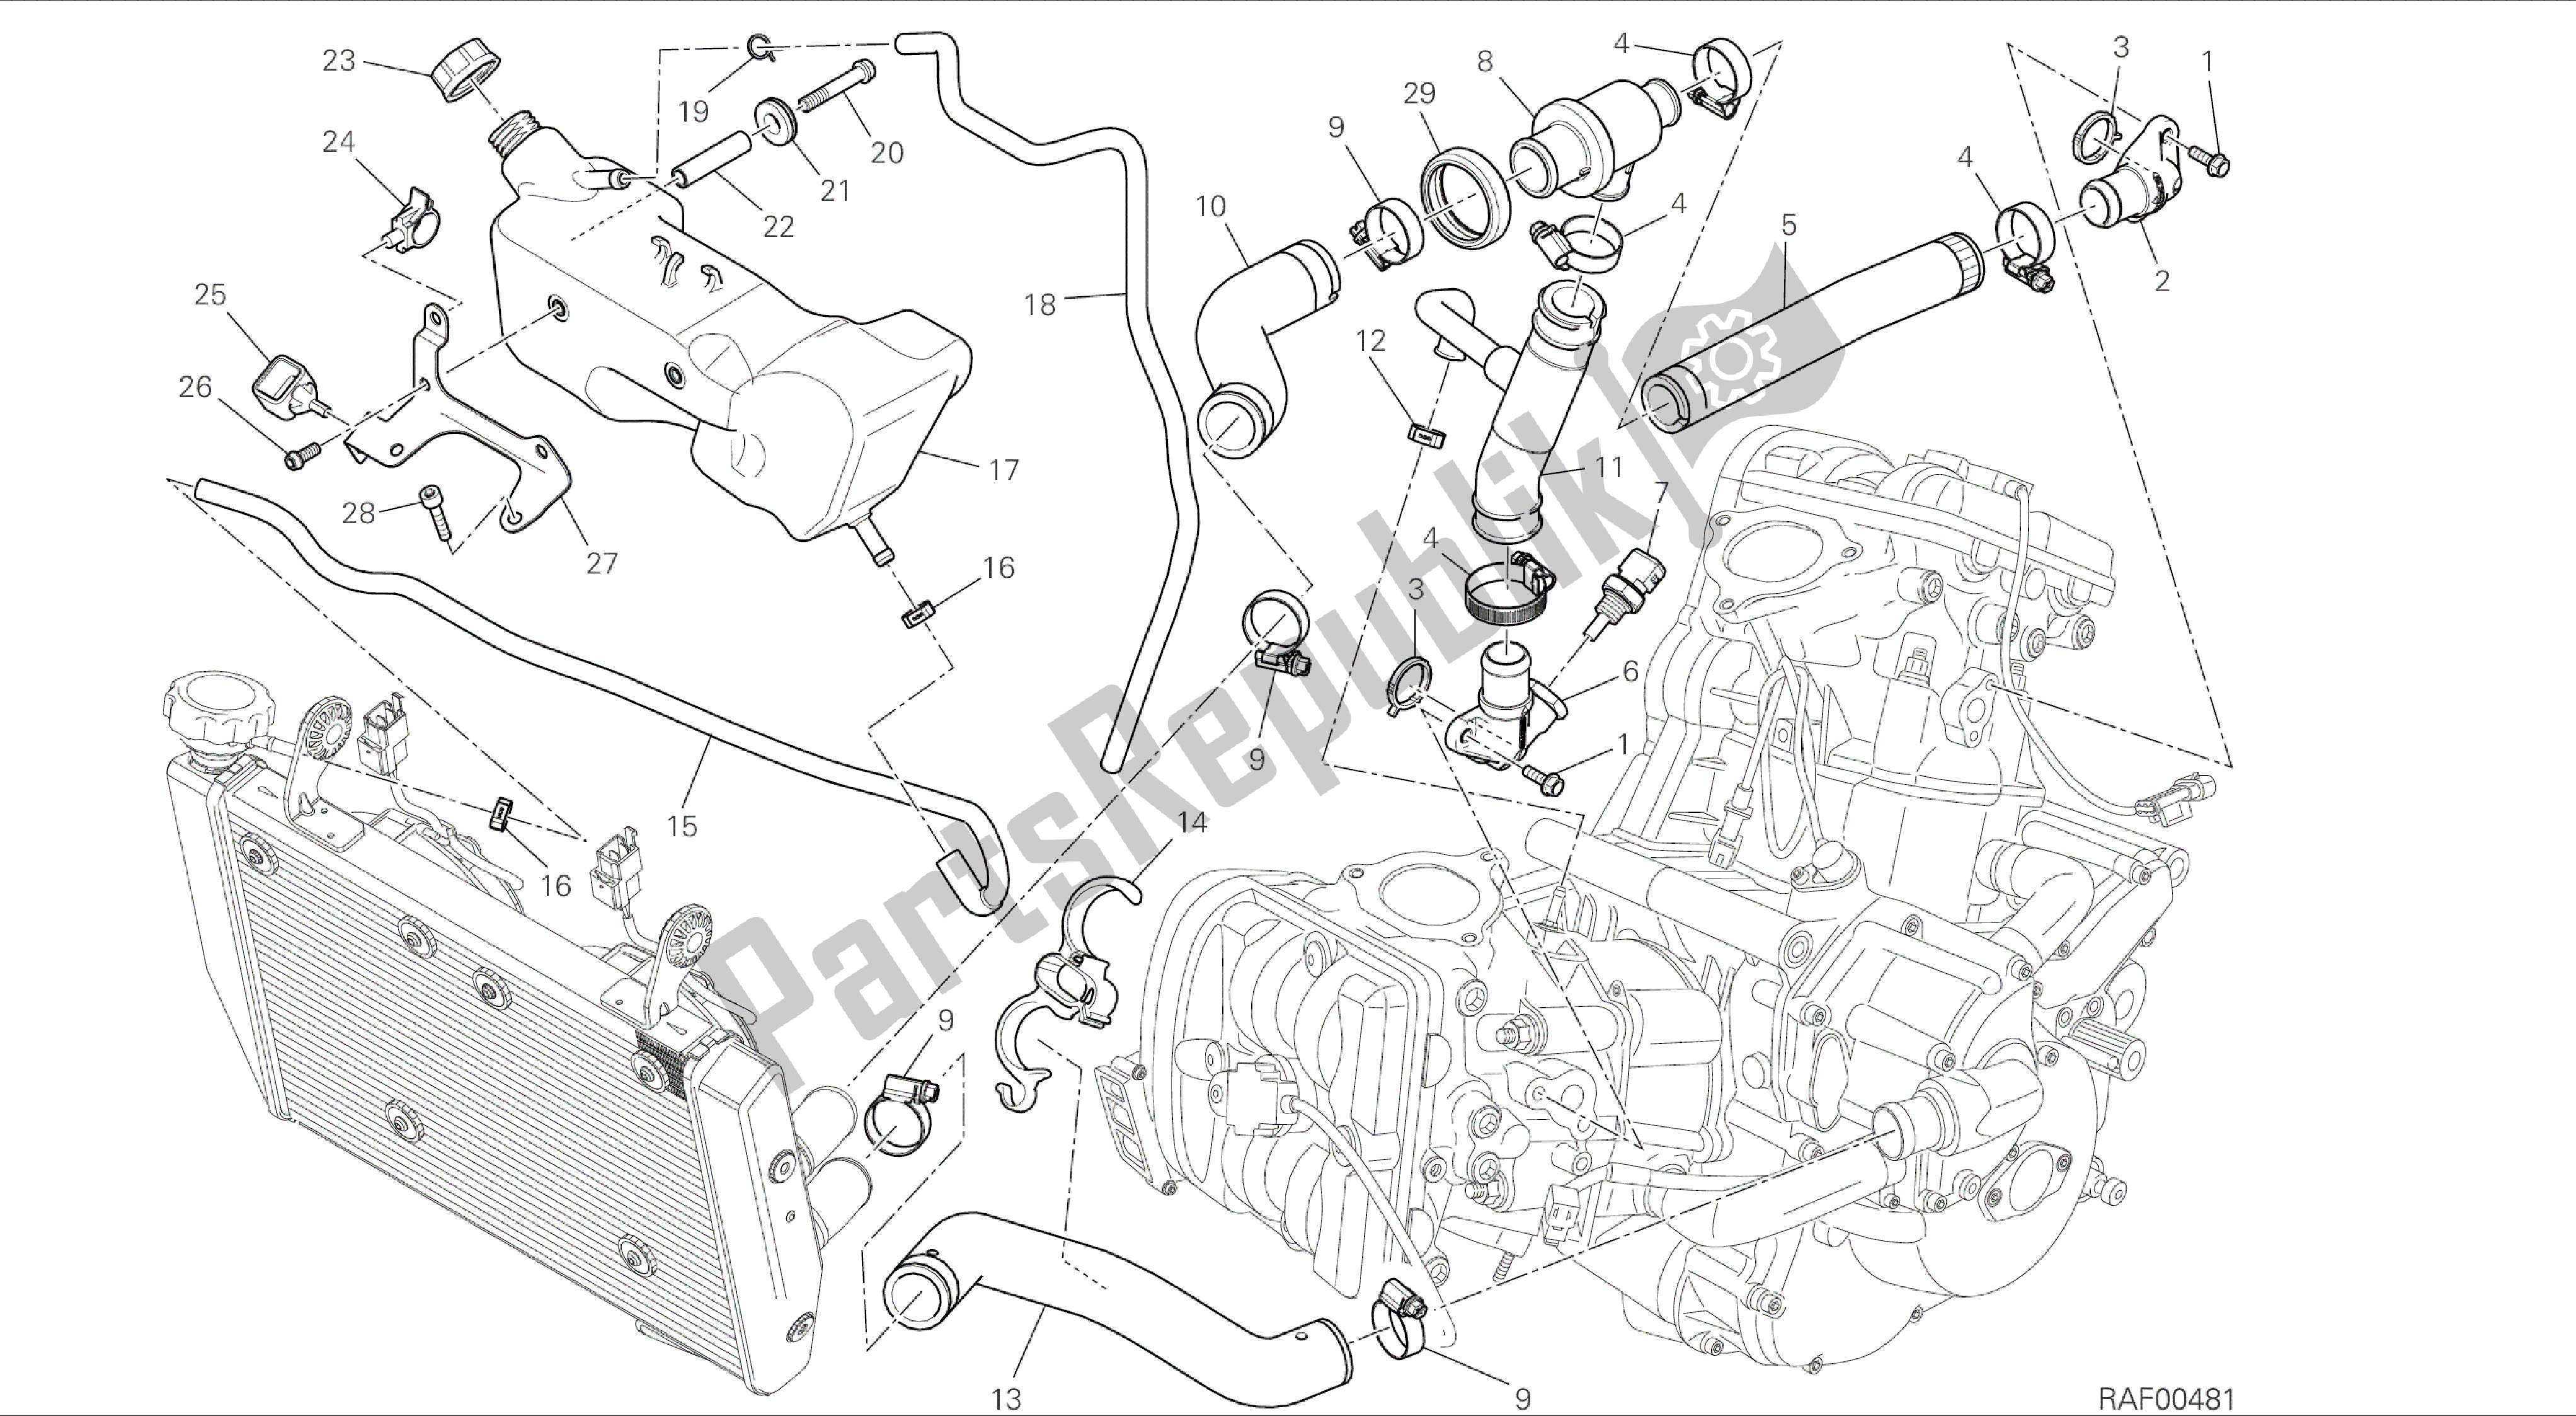 Todas as partes de Desenho 031 - Circuito De Resfriamento [mod: Hym; Xst: Aus, Chn, Eur, Fra, Jap, Tha, Twn] Quadro De Grupo do Ducati Hypermotard 821 2014